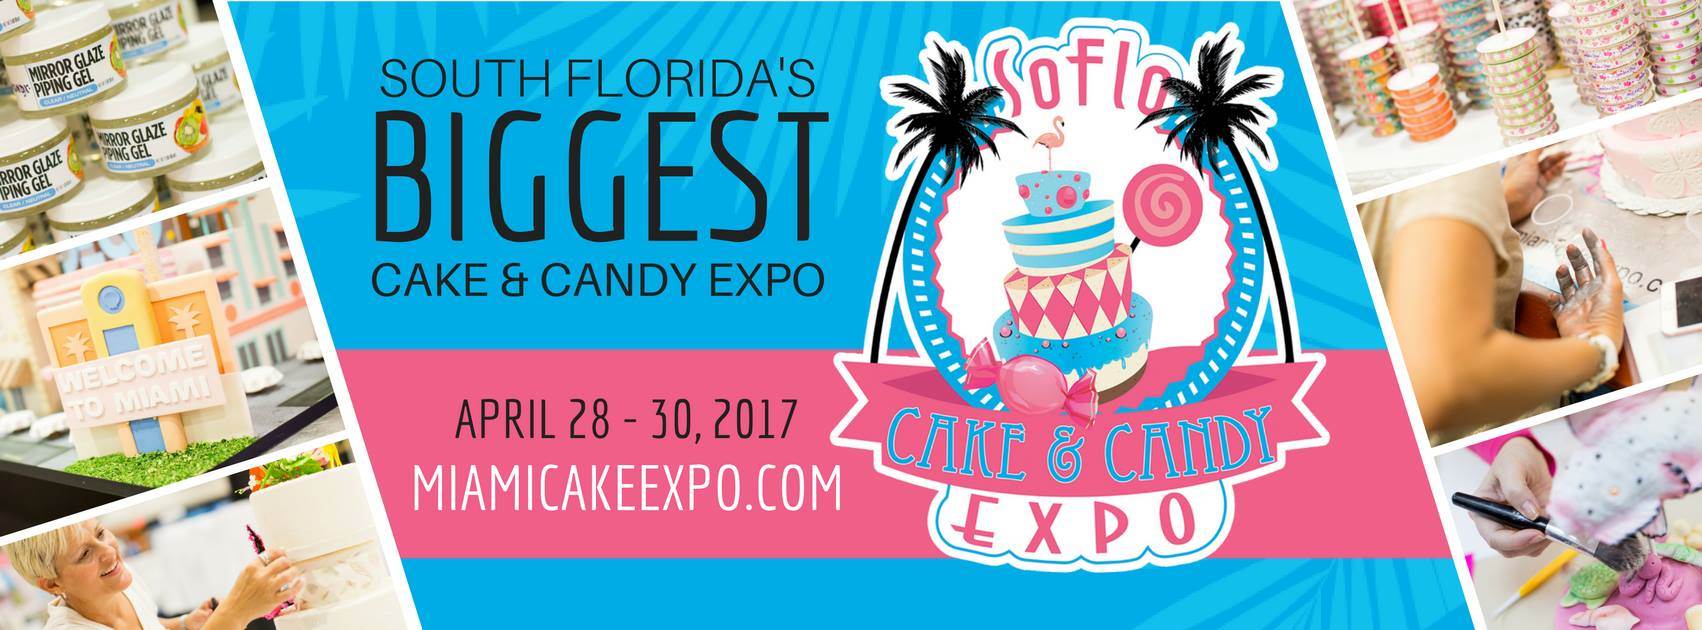 Soflo Cake Candy Expo